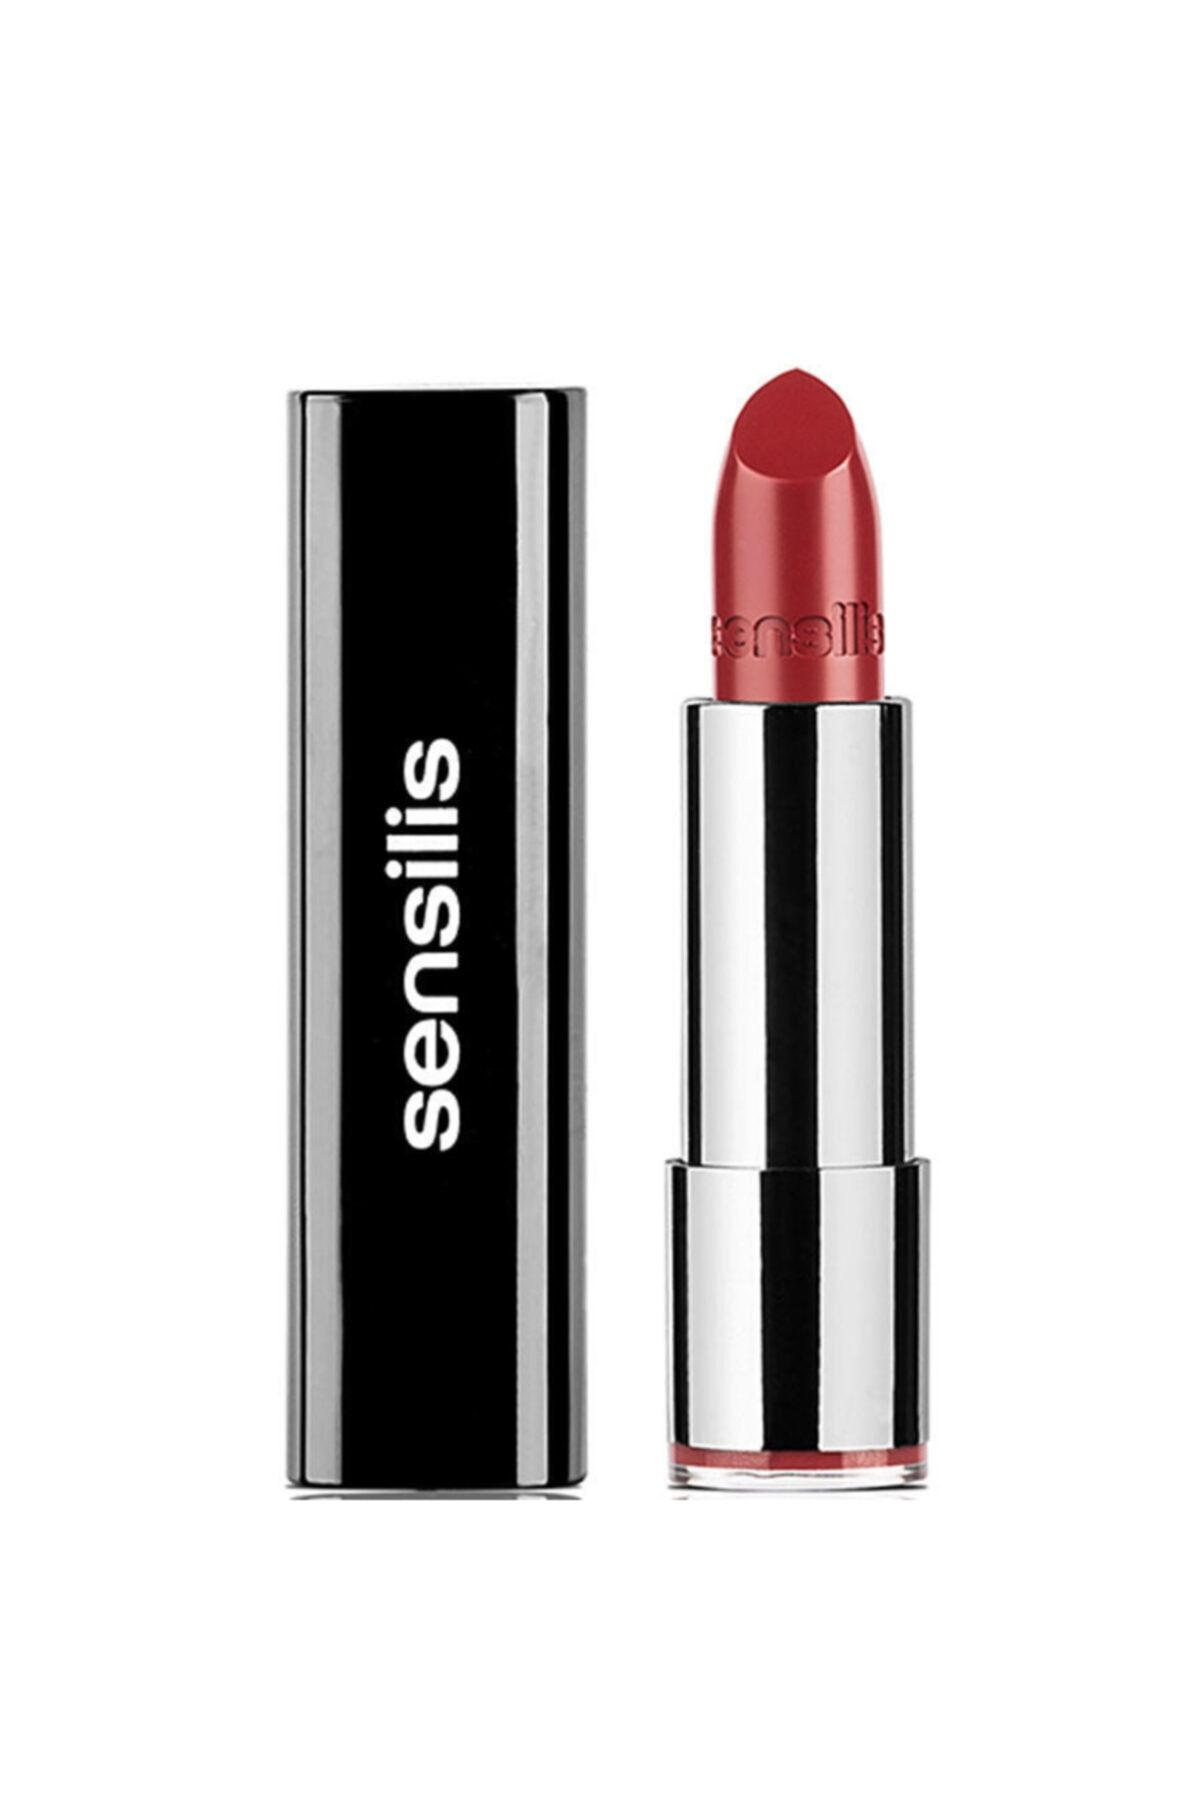 sensilis Ruj - Velvet Satin Comfort Lipstick 208 Prune 8428749521907